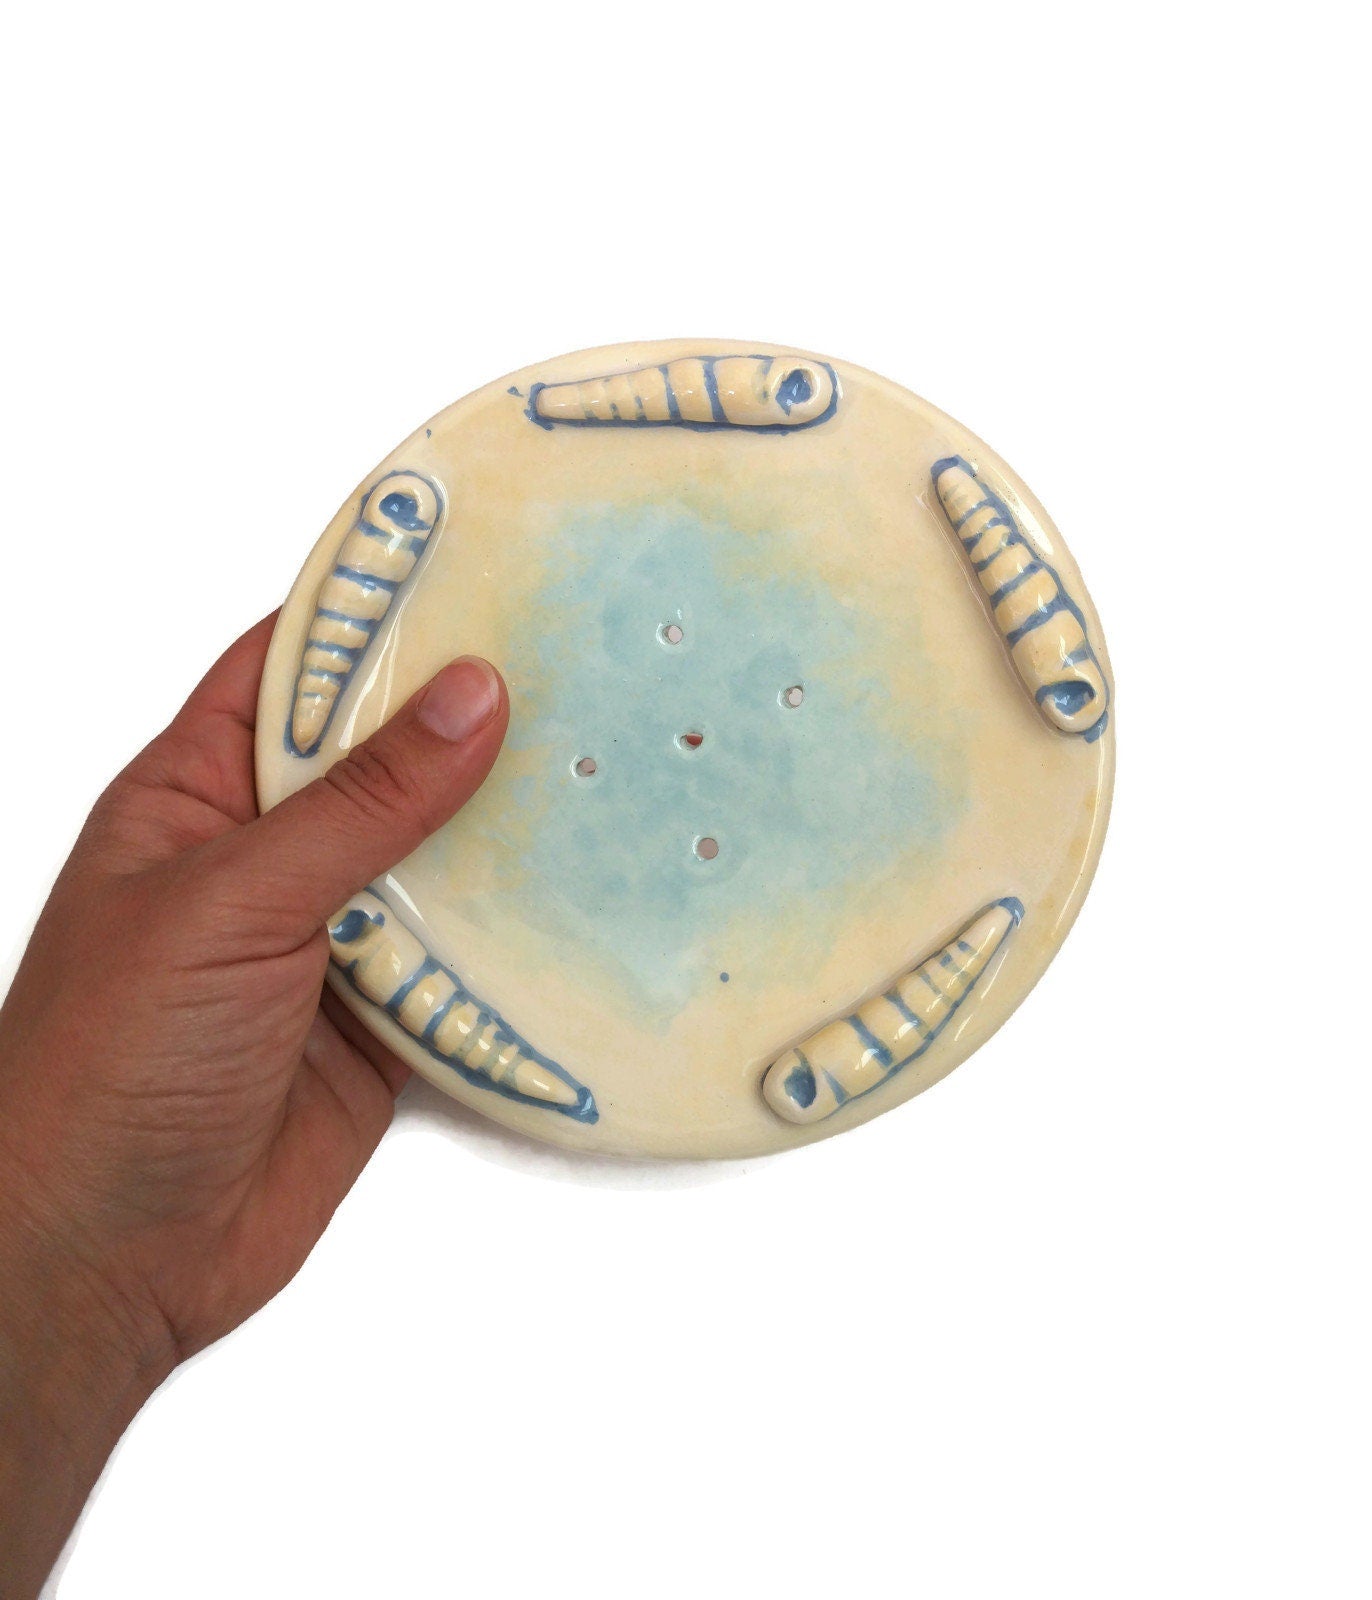 Handmade Ceramic Sea Shell Soap Dish Dispenser Yellow and Blue, Beach Themed Decor Draining Soap Bar Holder, Bathroom Tray For Shaving Soap - Ceramica Ana Rafael